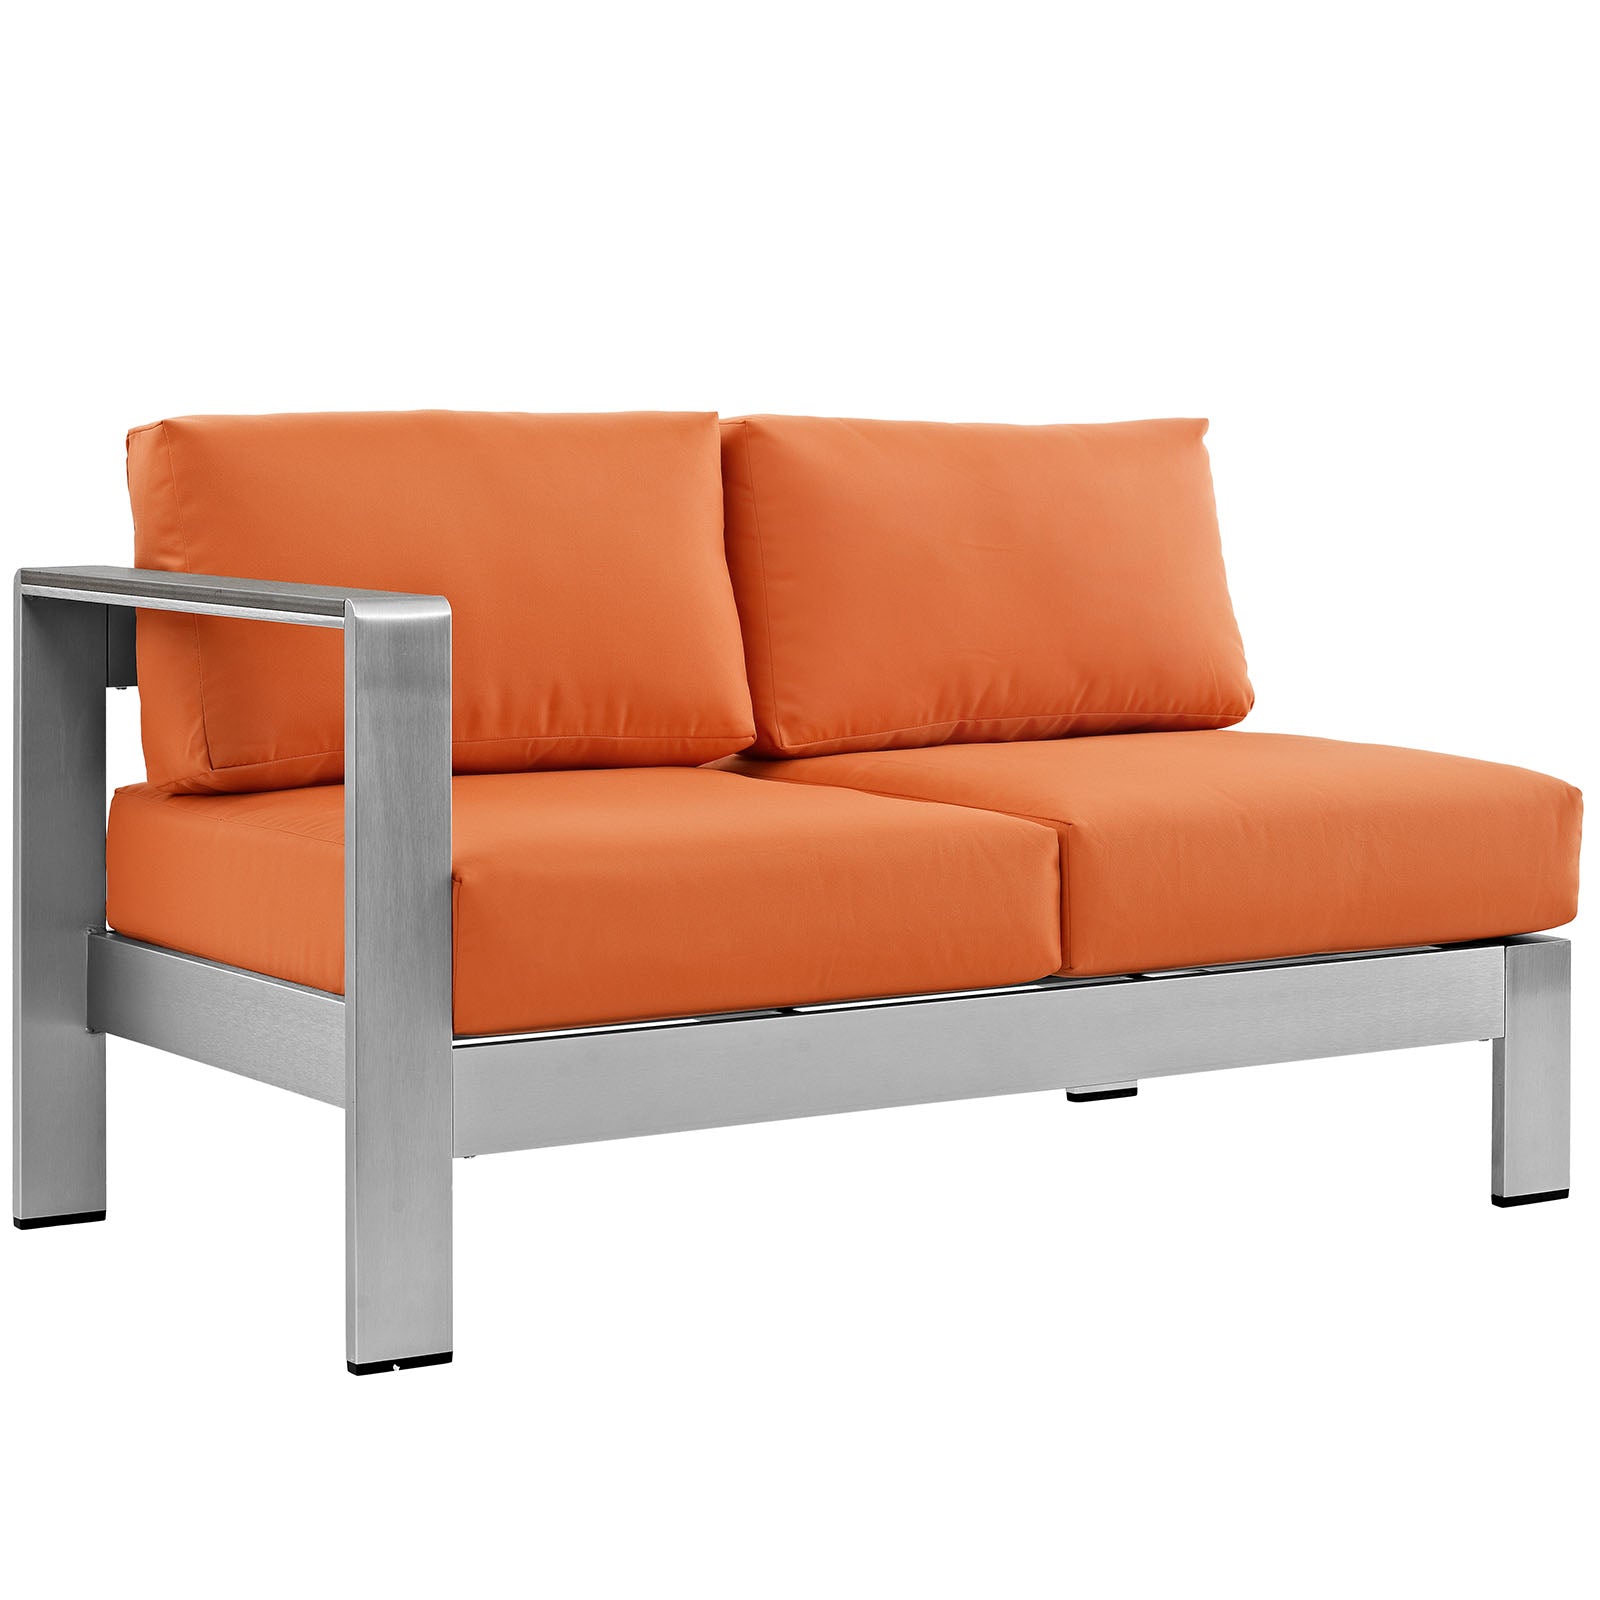 Shore 6 Piece Outdoor Patio Aluminum Sectional Sofa Set-Outdoor Set-Modway-Wall2Wall Furnishings